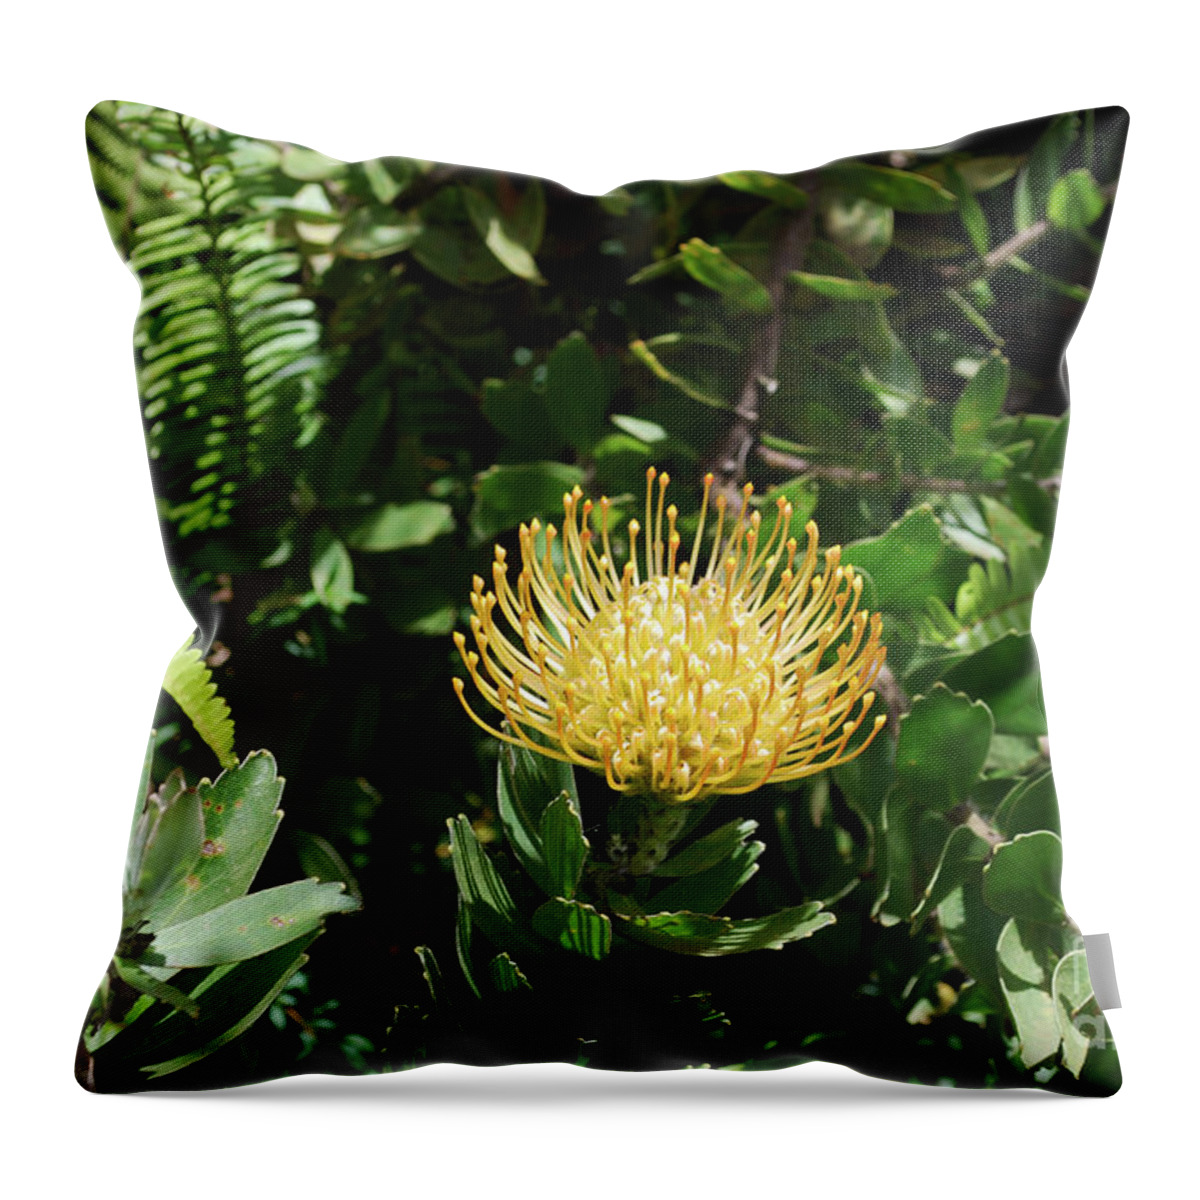 Protea Throw Pillow featuring the photograph Tropical yellow protea flower in a garden by DejaVu Designs